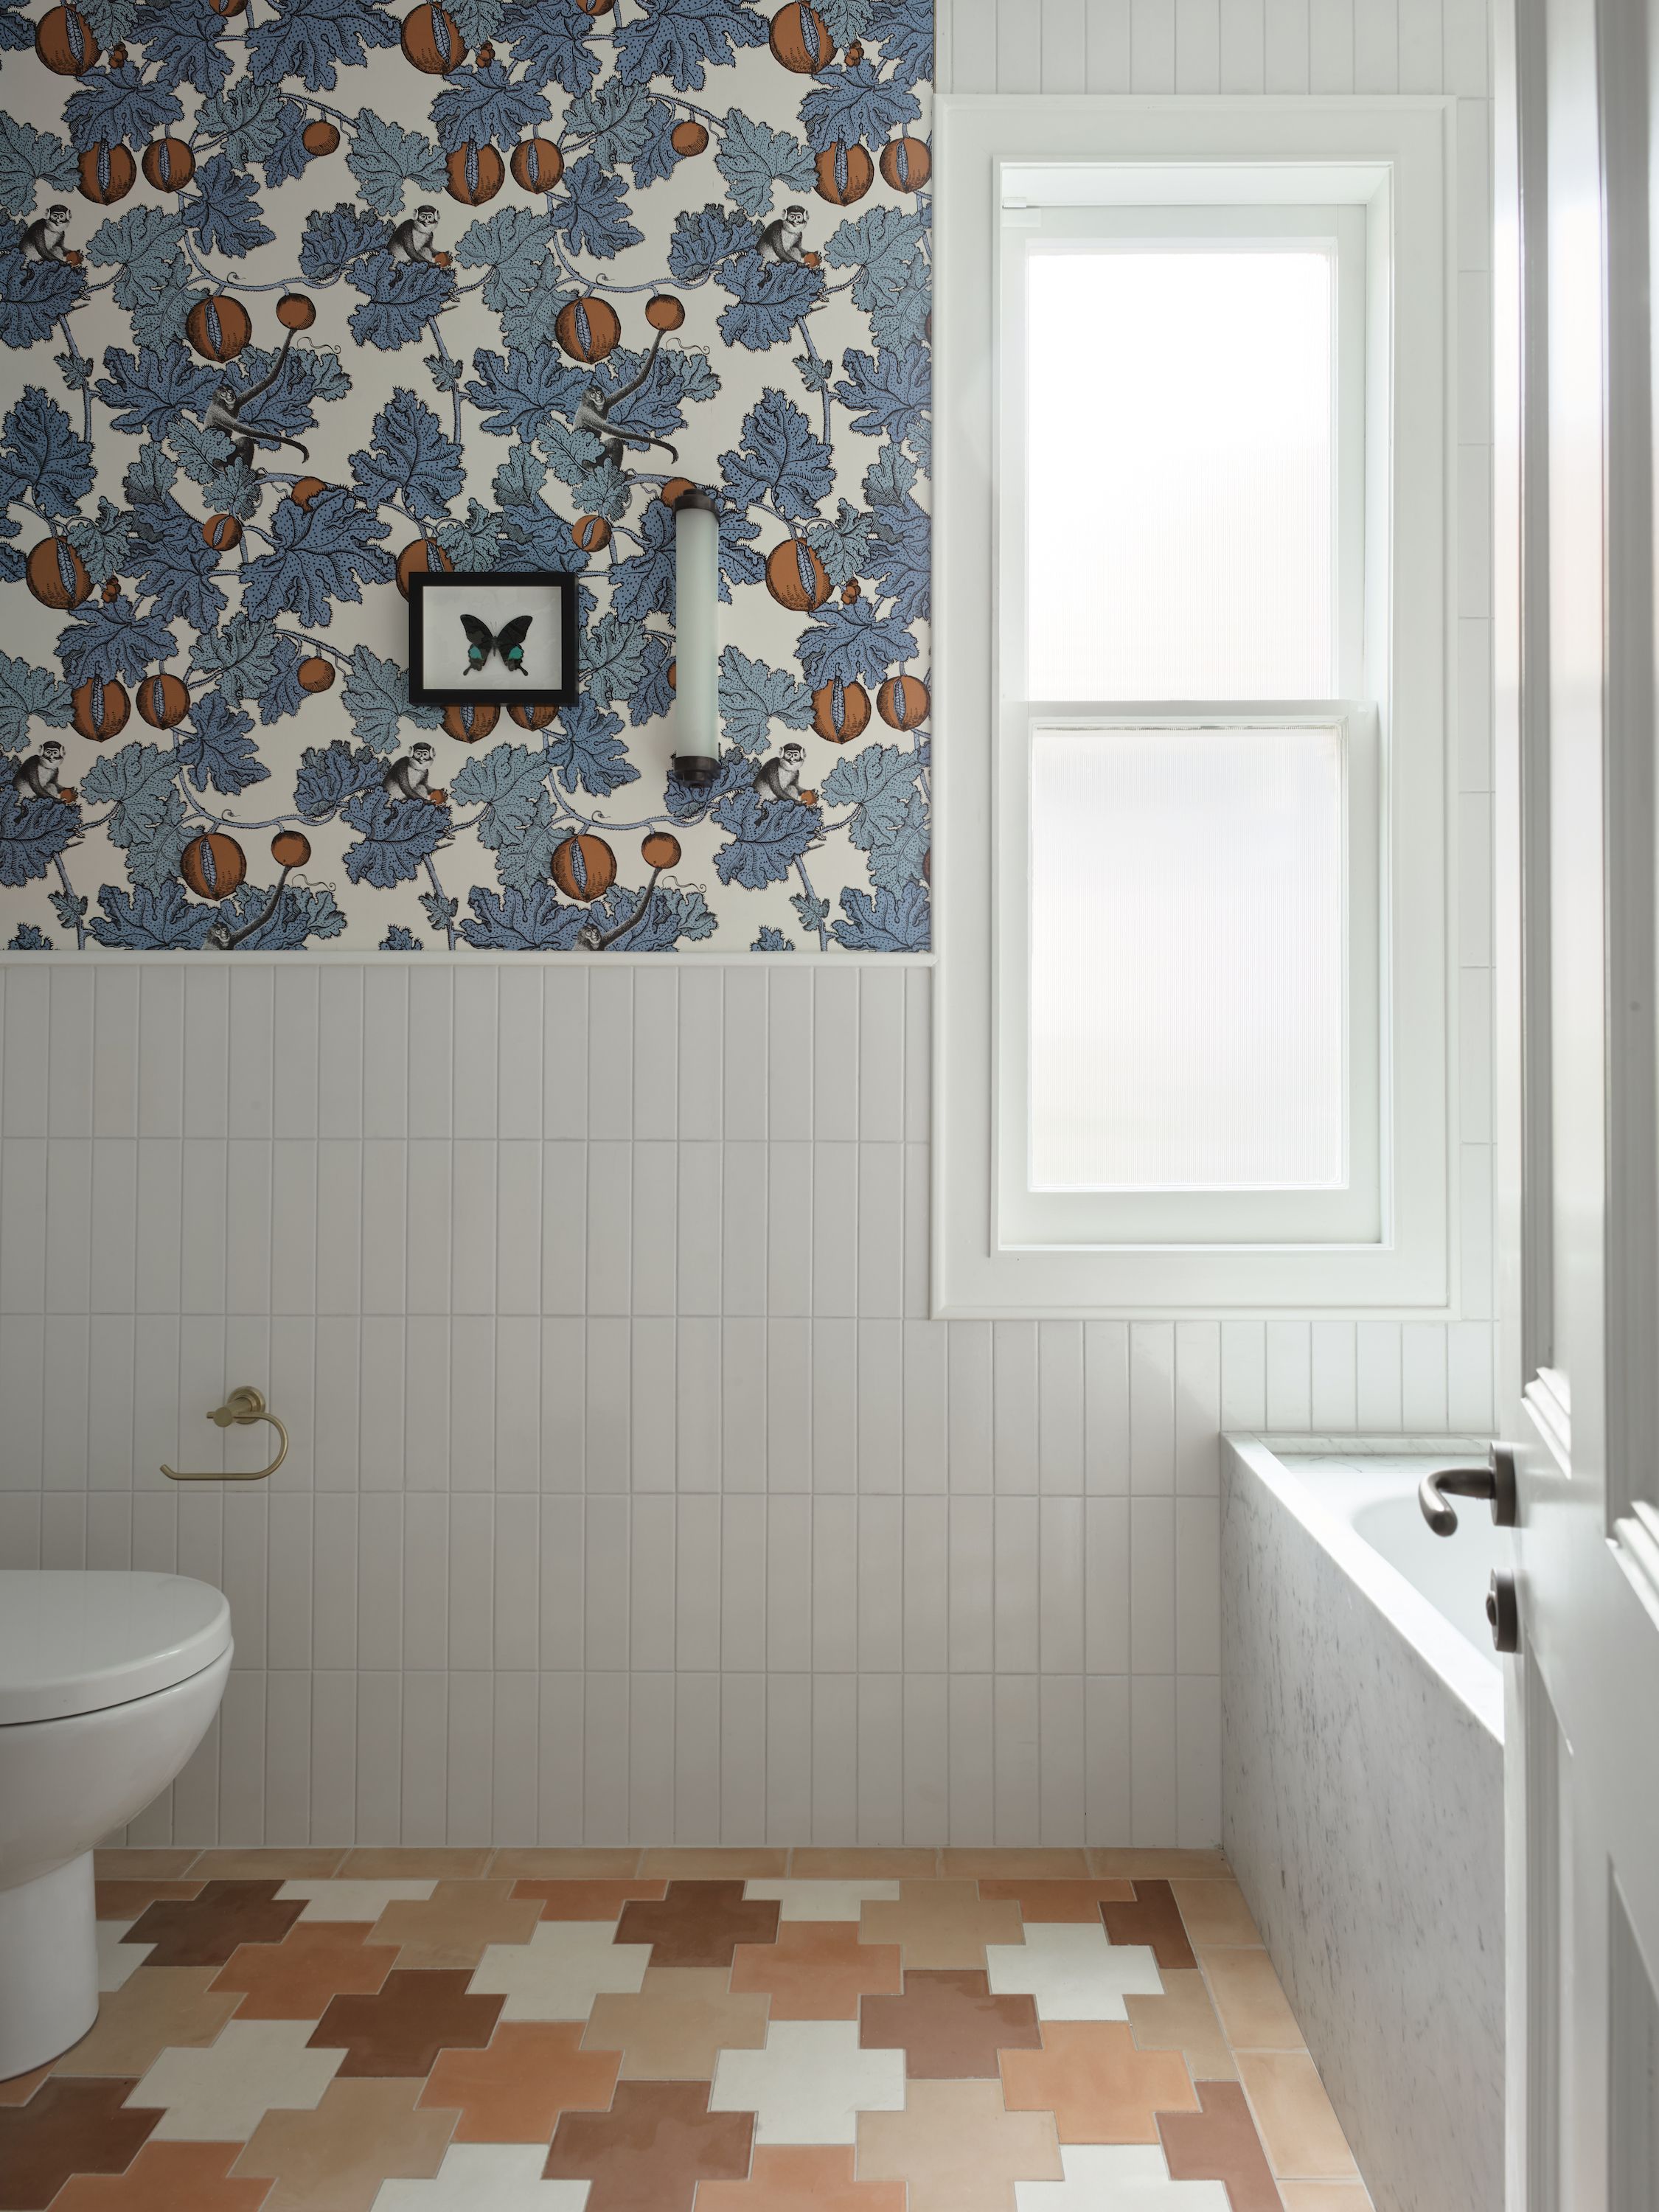 Bathroom tile ideas 31 designs inspired by bathroom tiles 